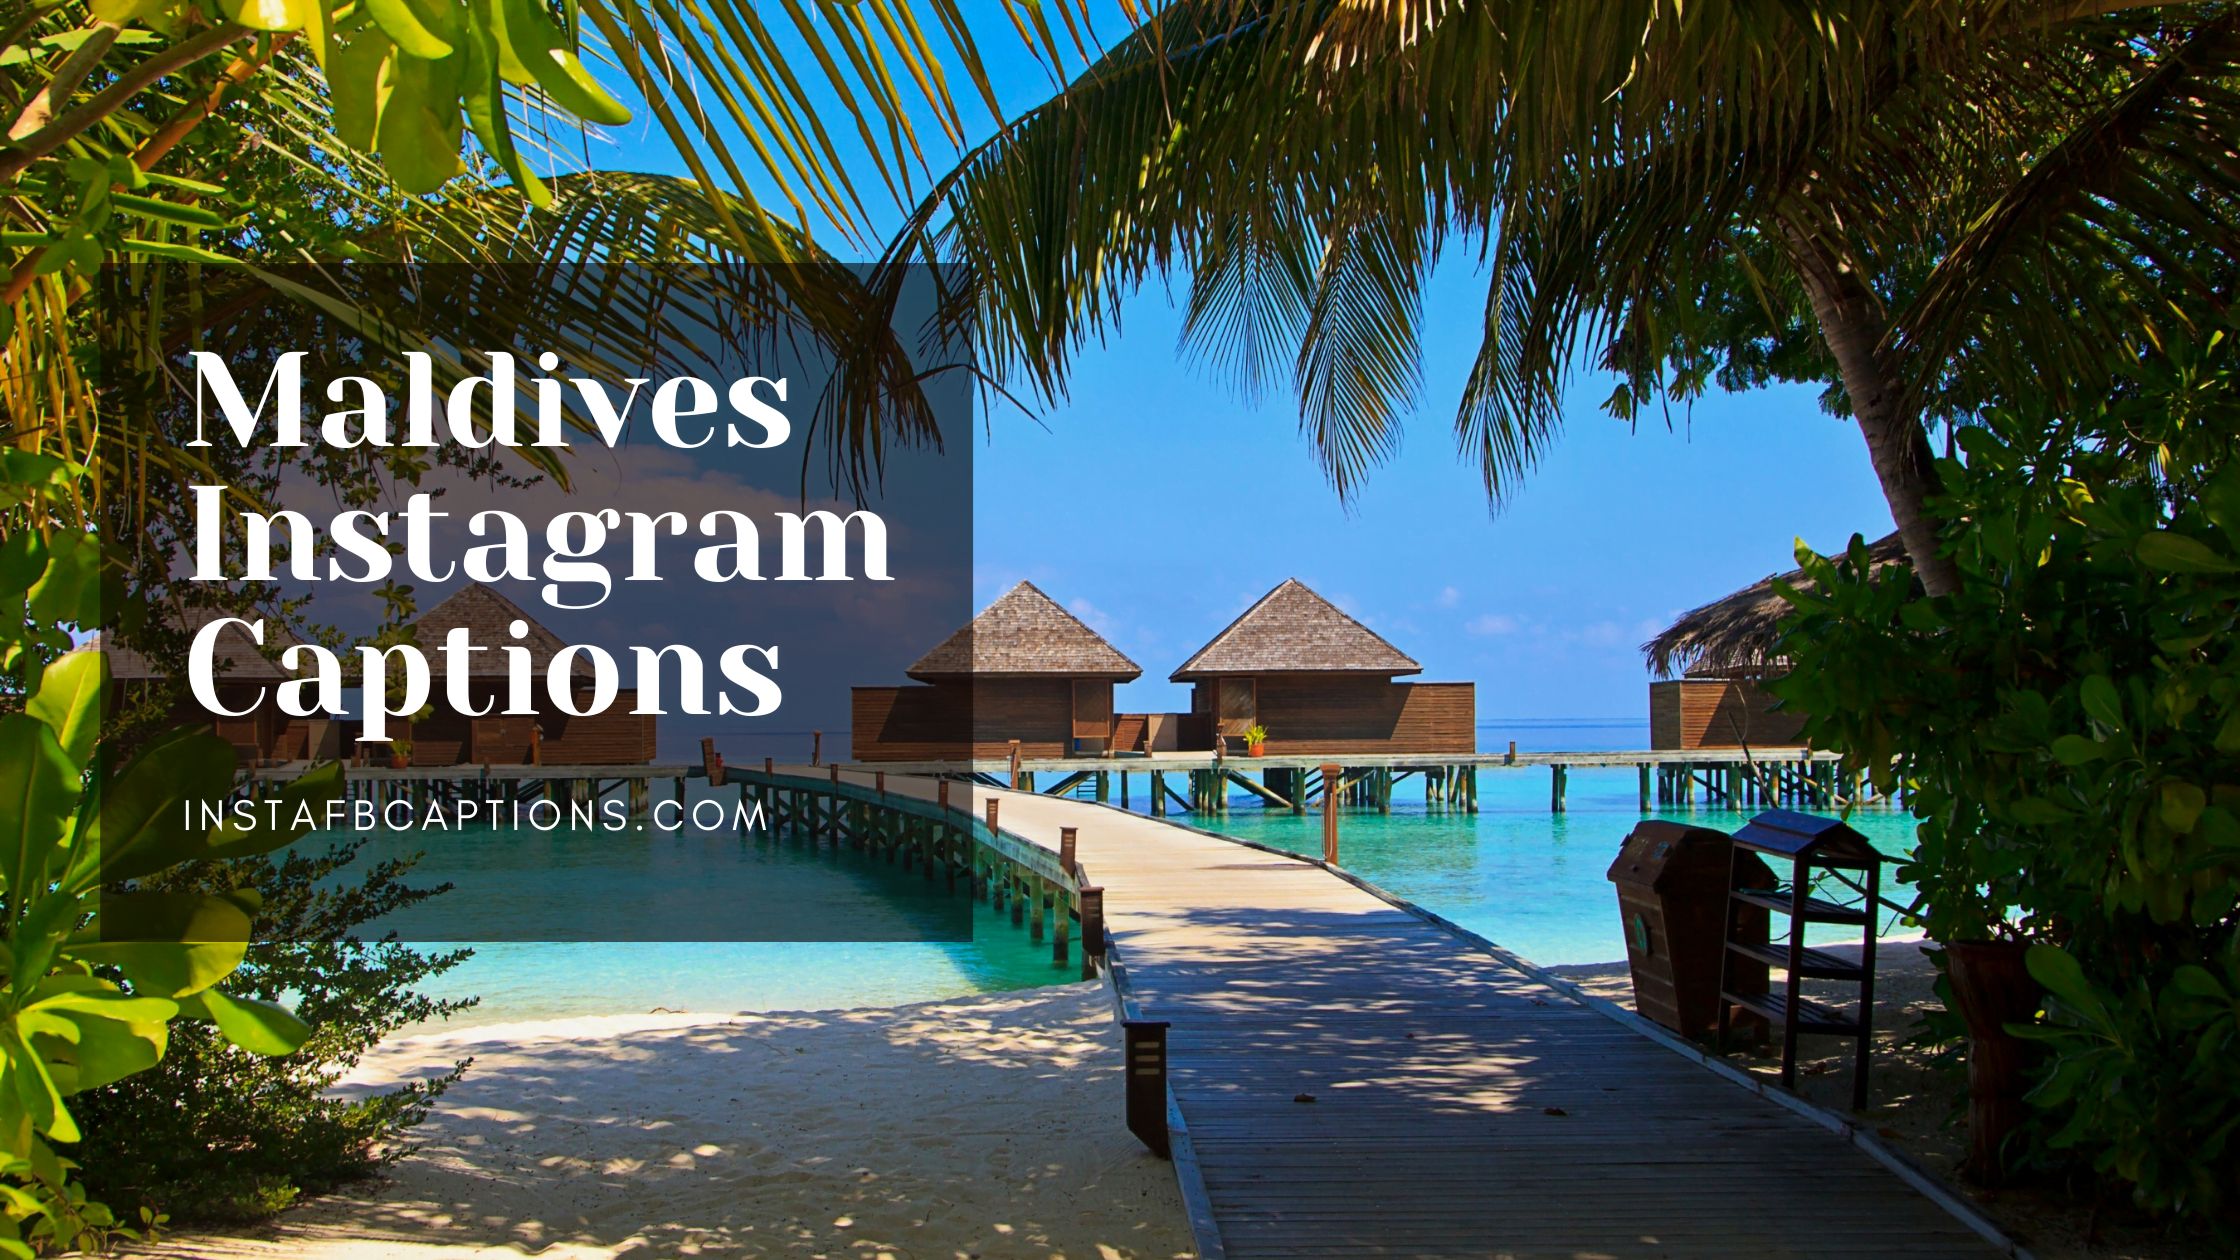 Maldives Instagram Captions  - Maldives Instagram Captions - Maldives Instagram Captions for Vacation Pictures in 2022